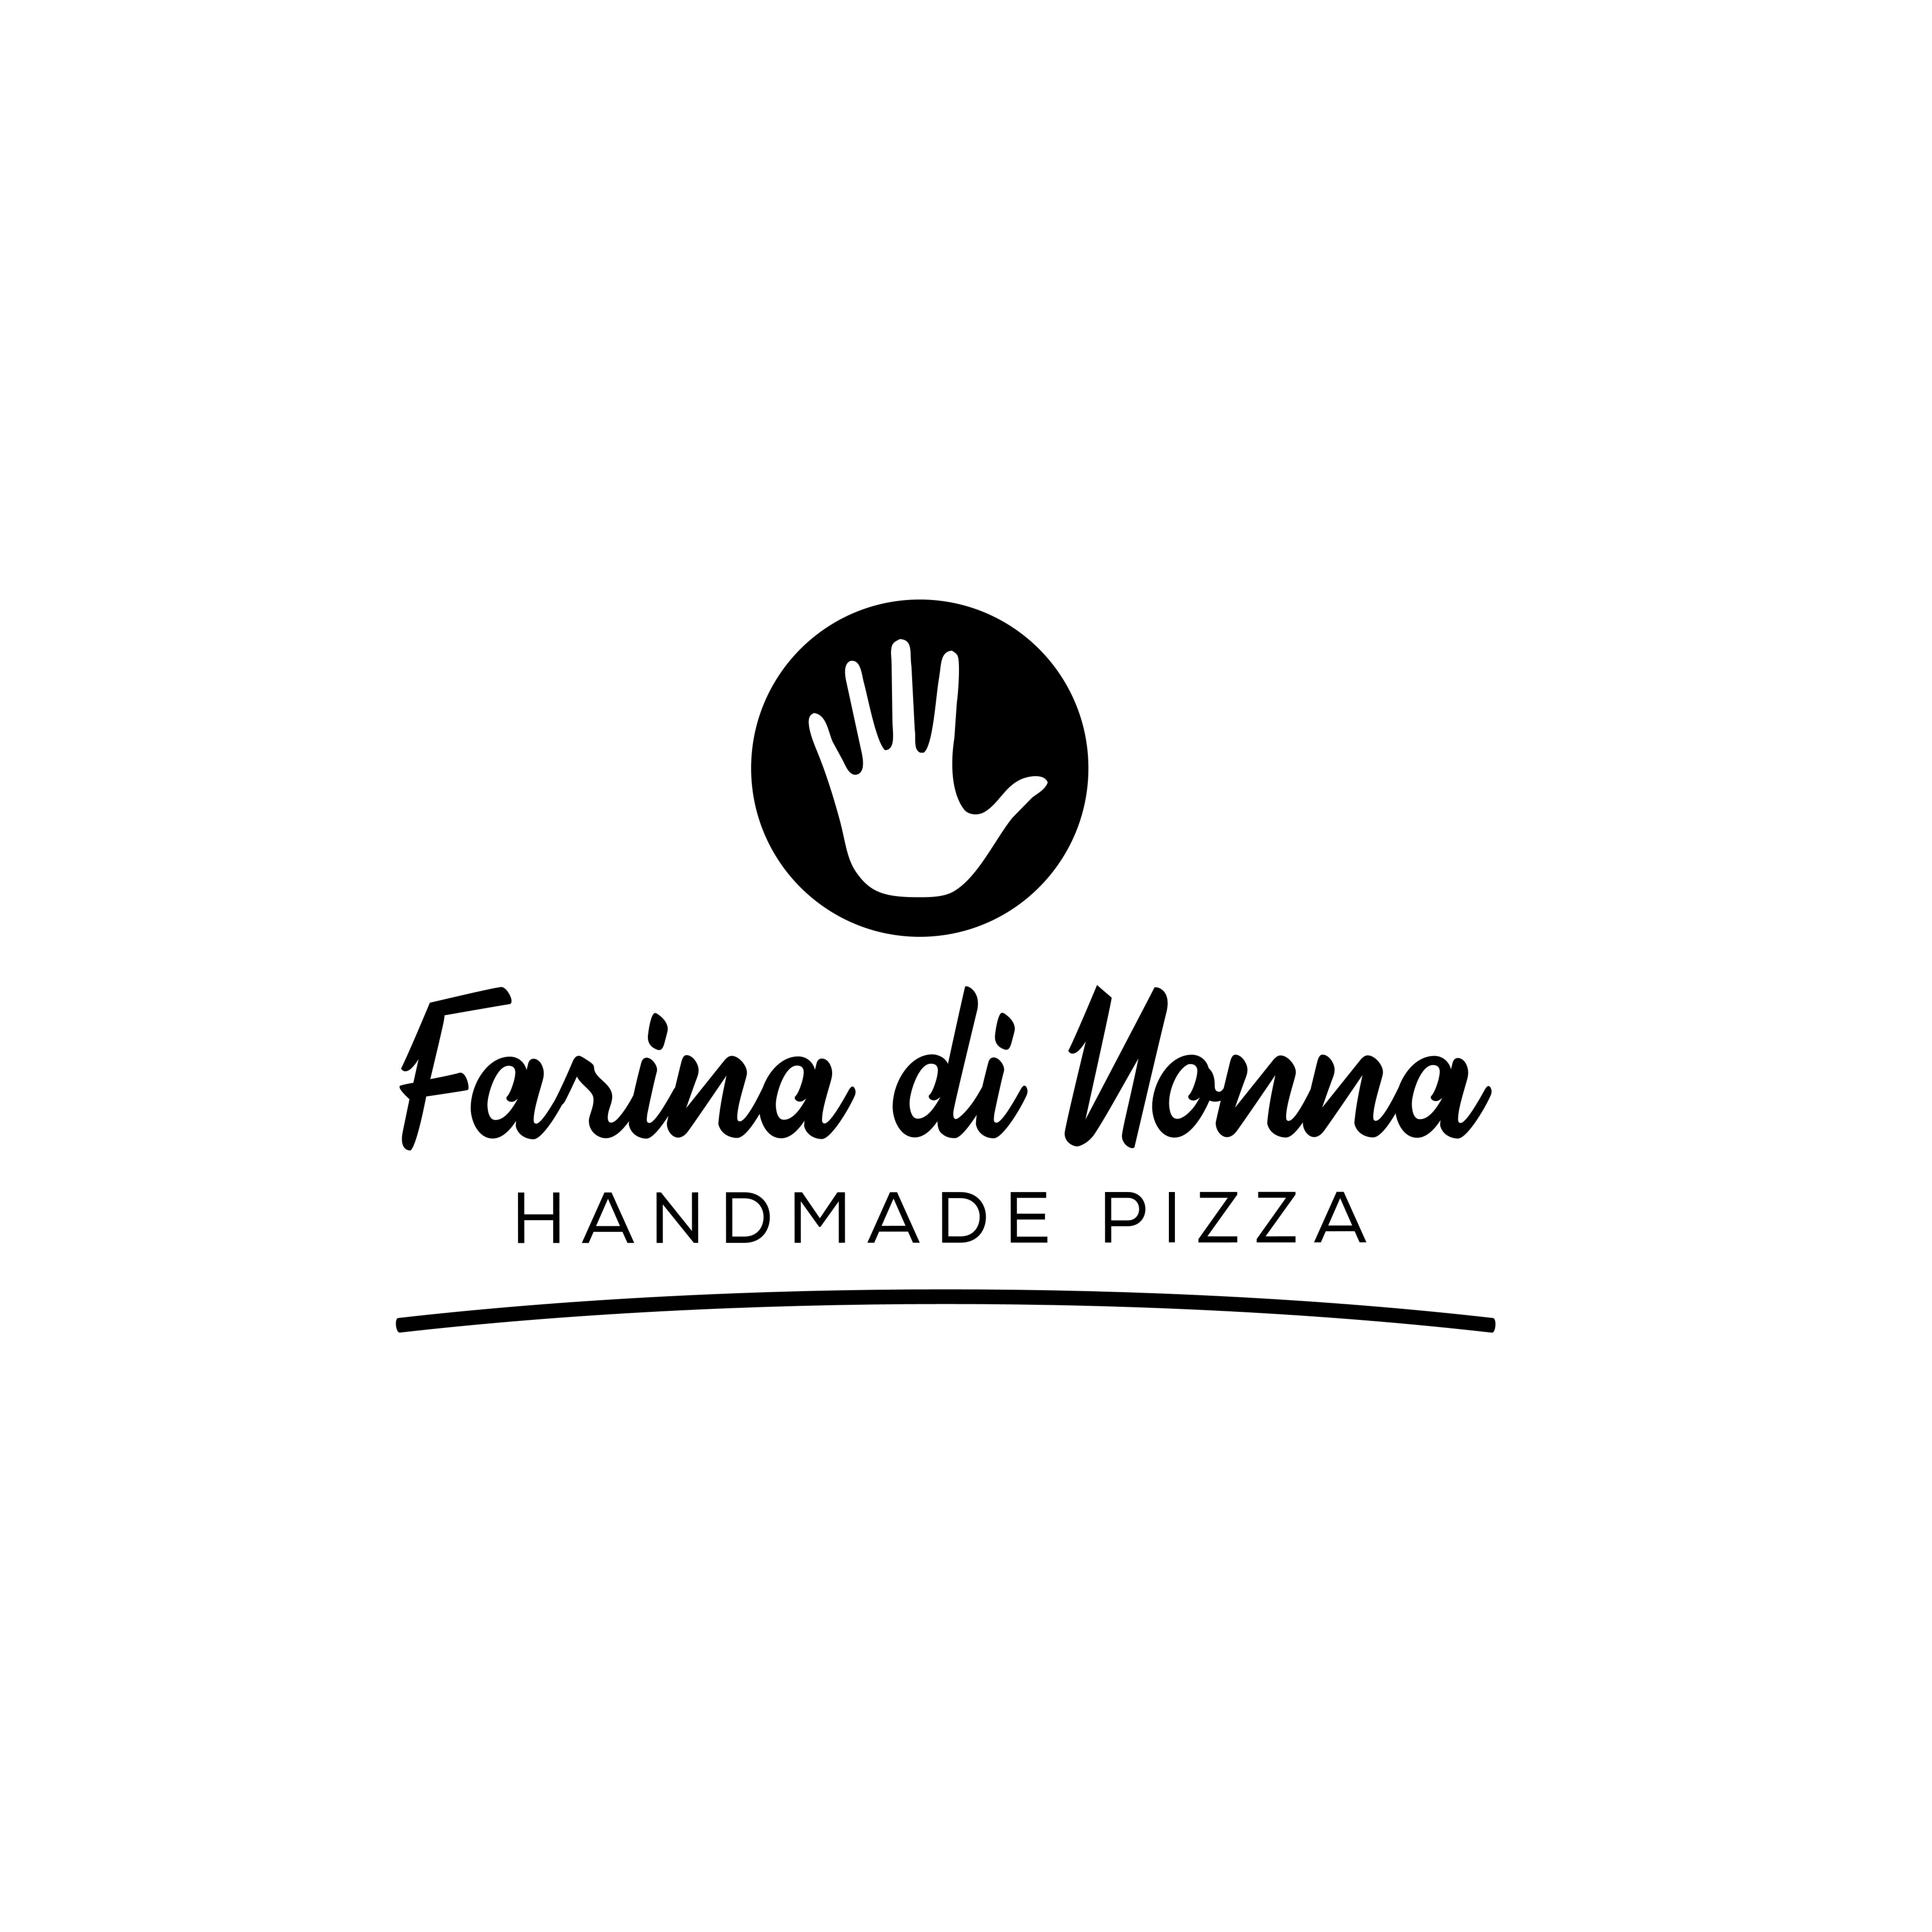 Logo Restaurant Farina di Nonna - HANDMADE PIZZA